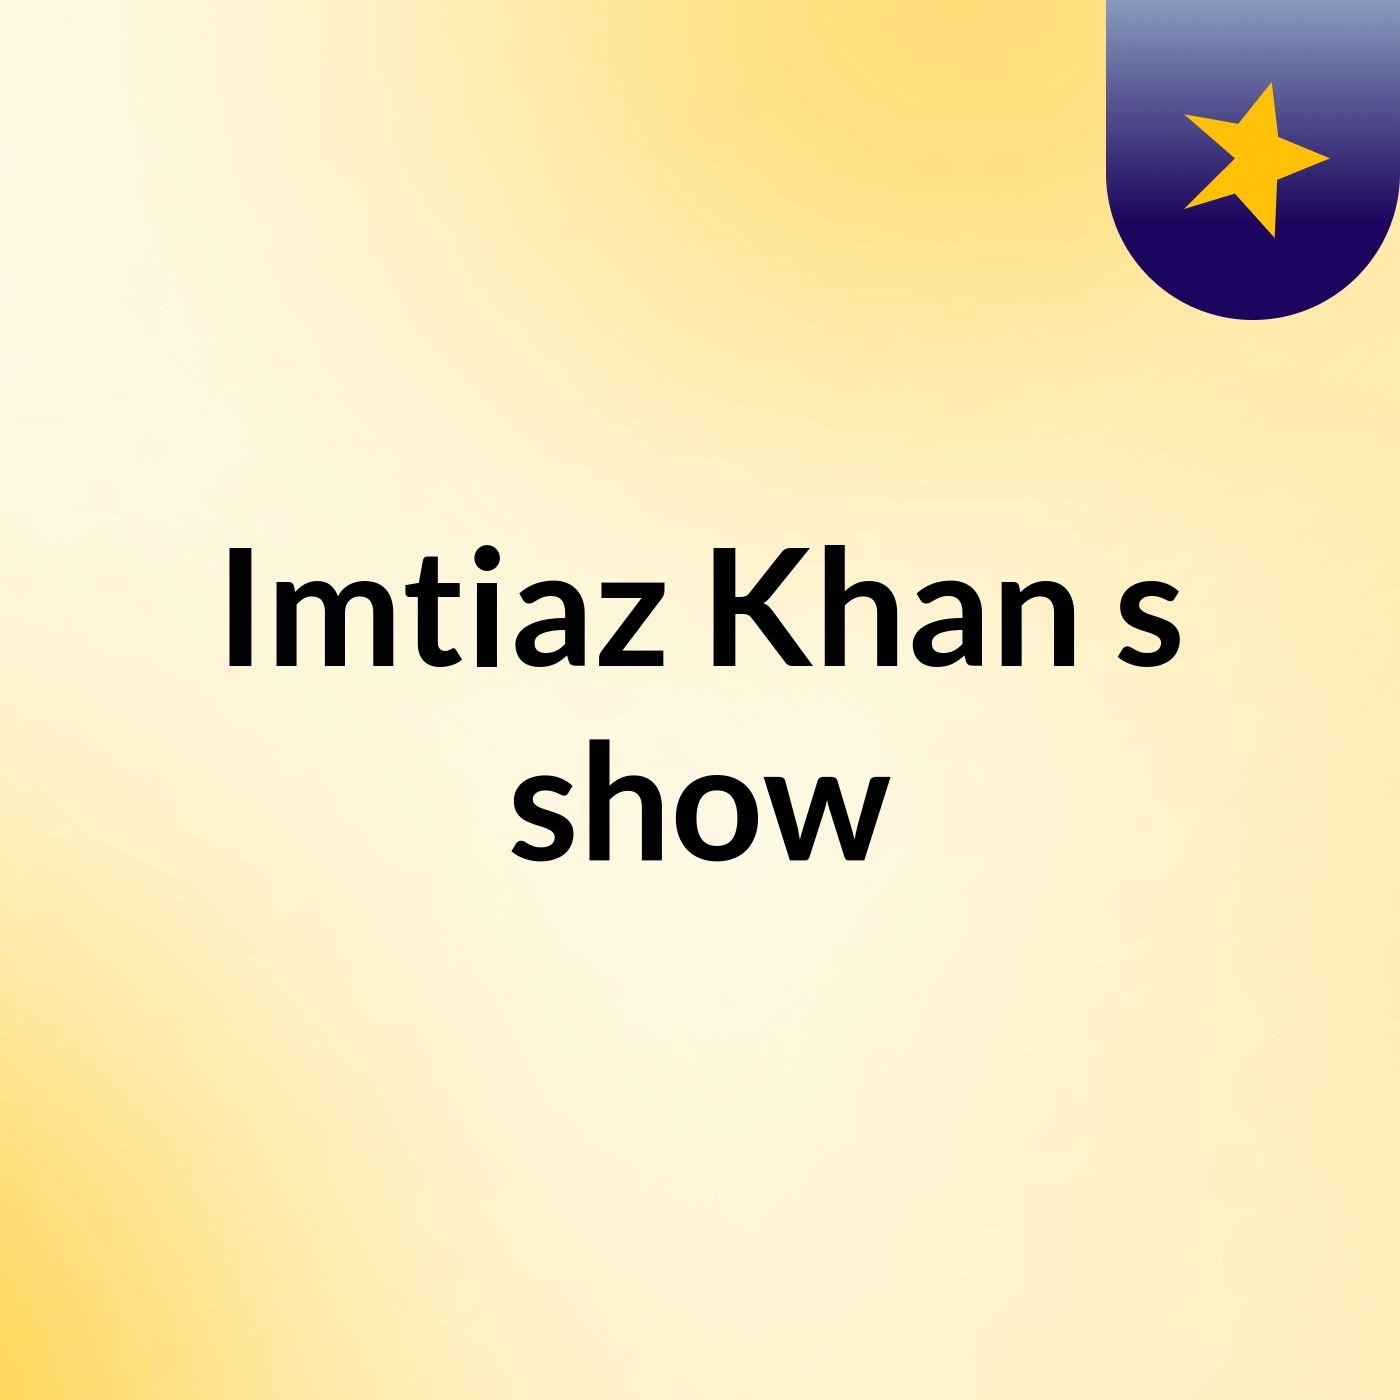 Imtiaz Khan's show